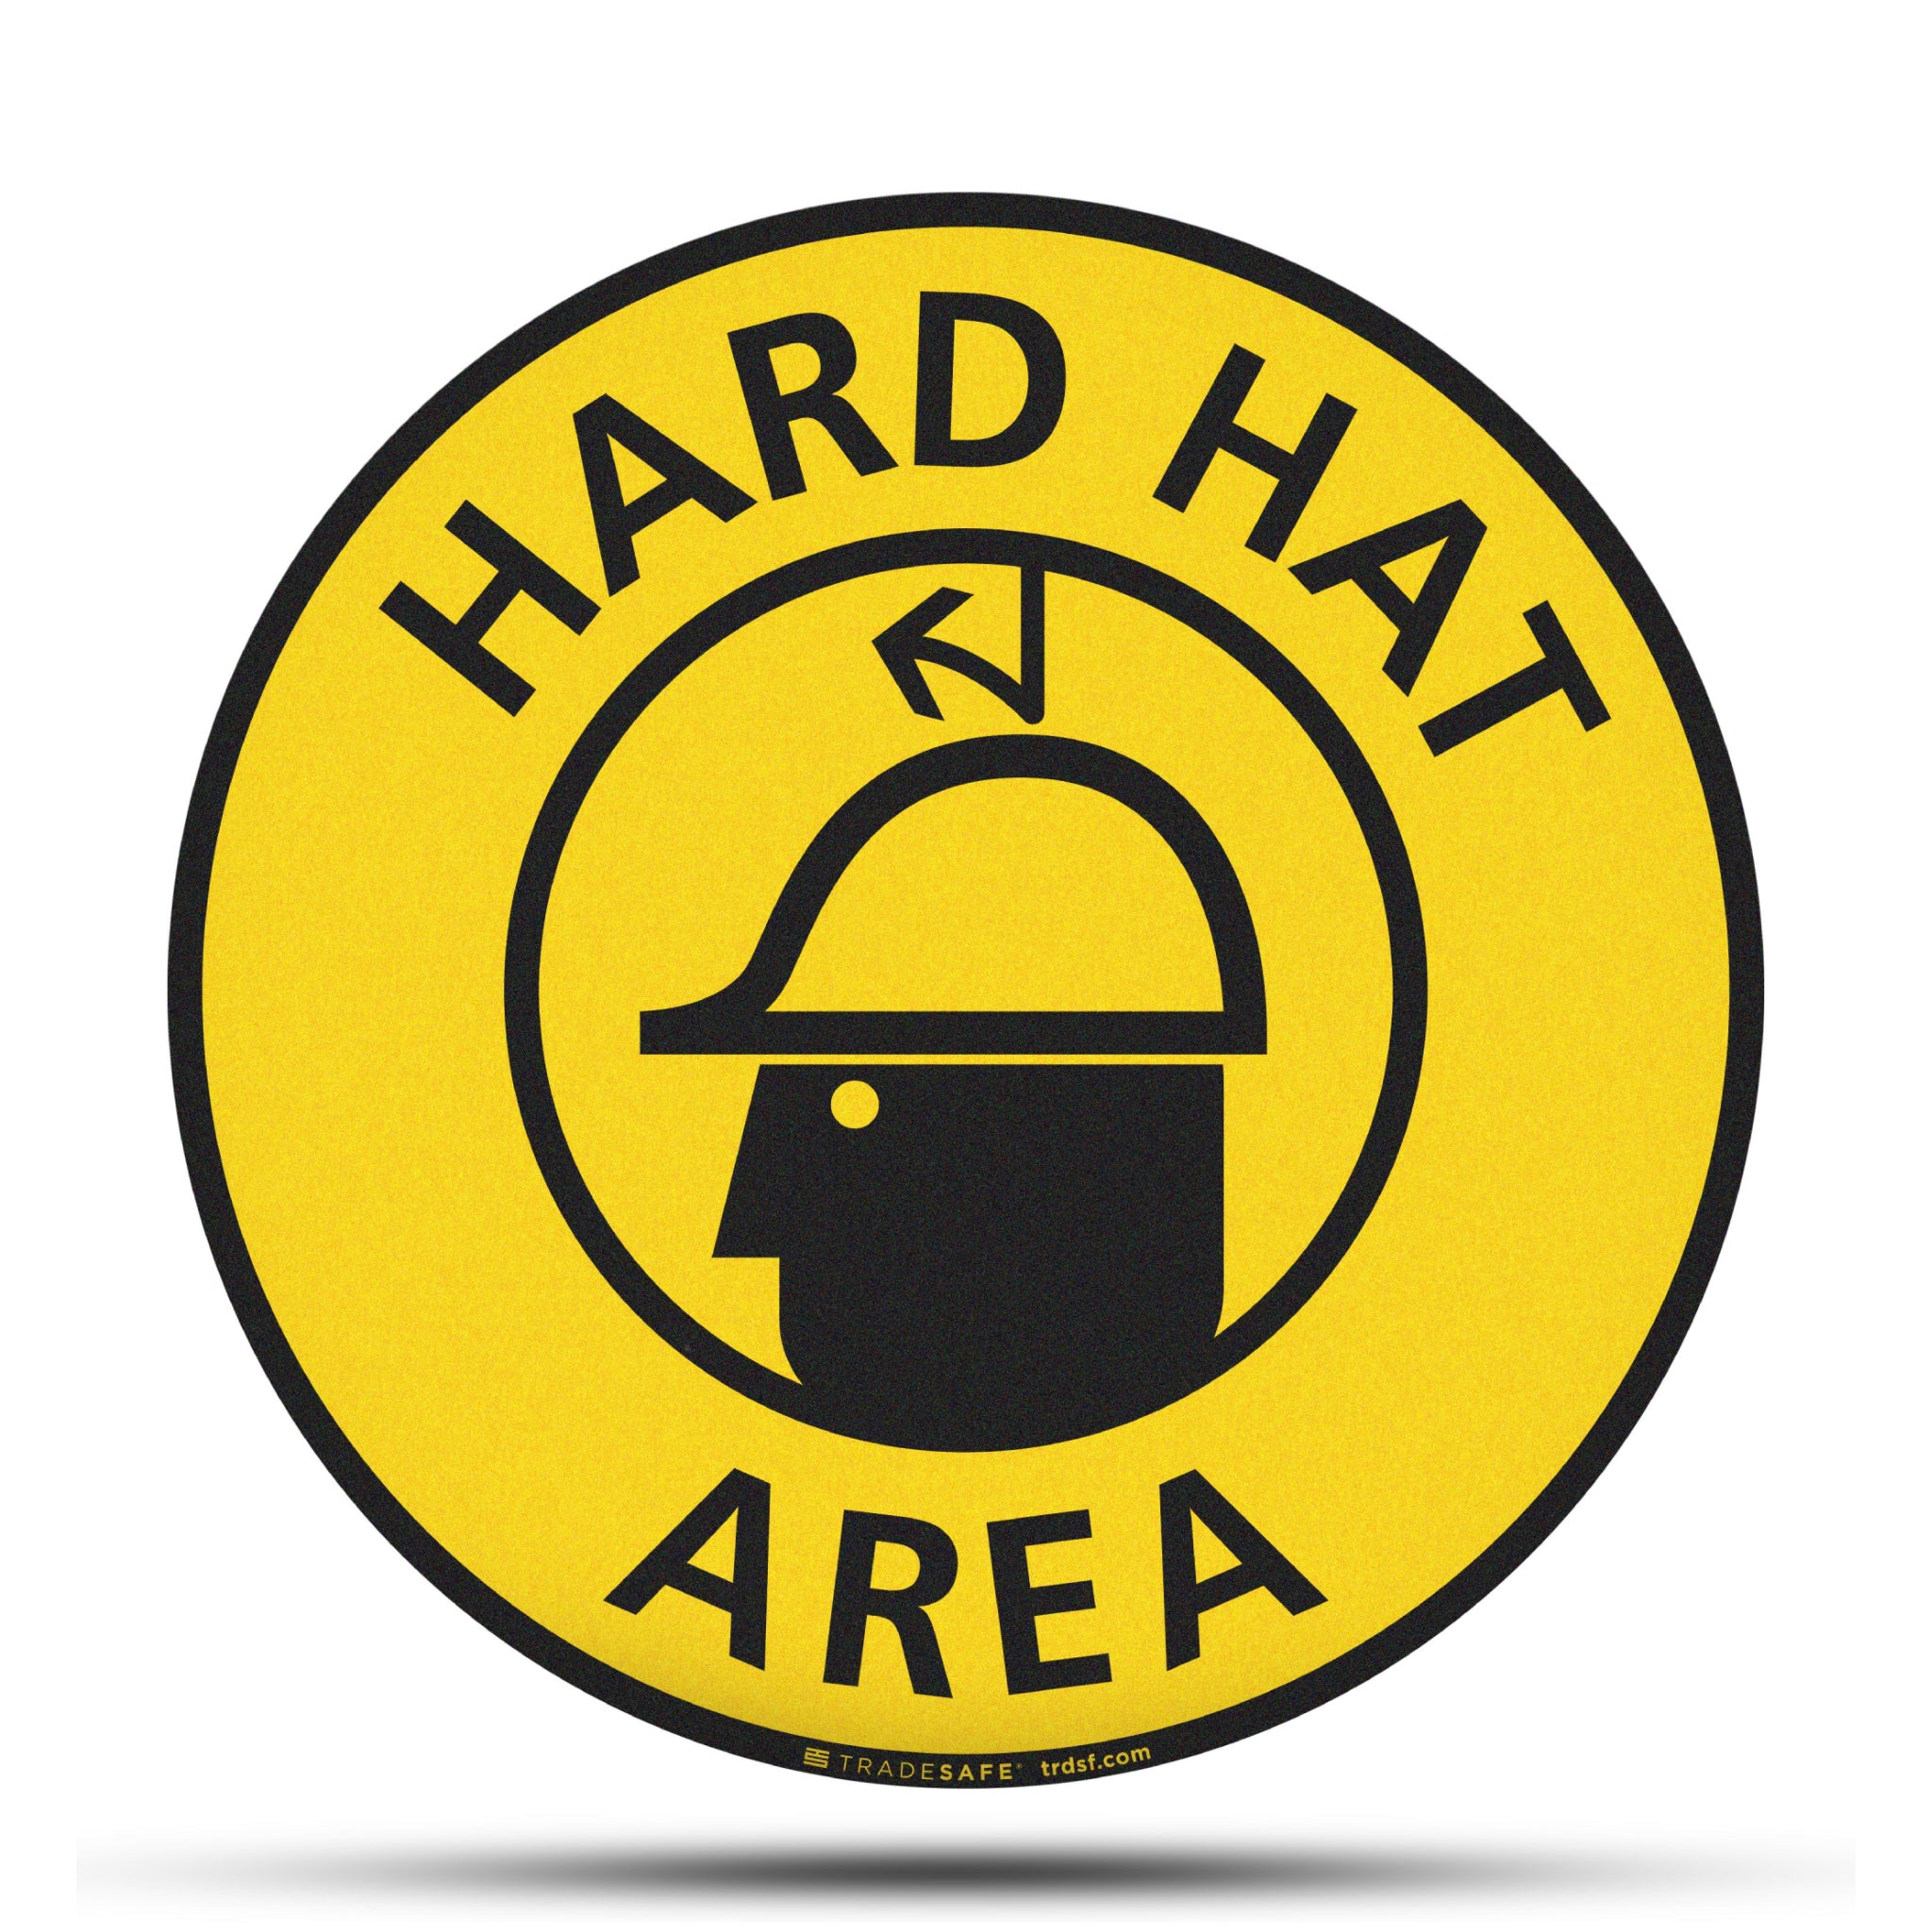 Hard Hat Area Floor Sign